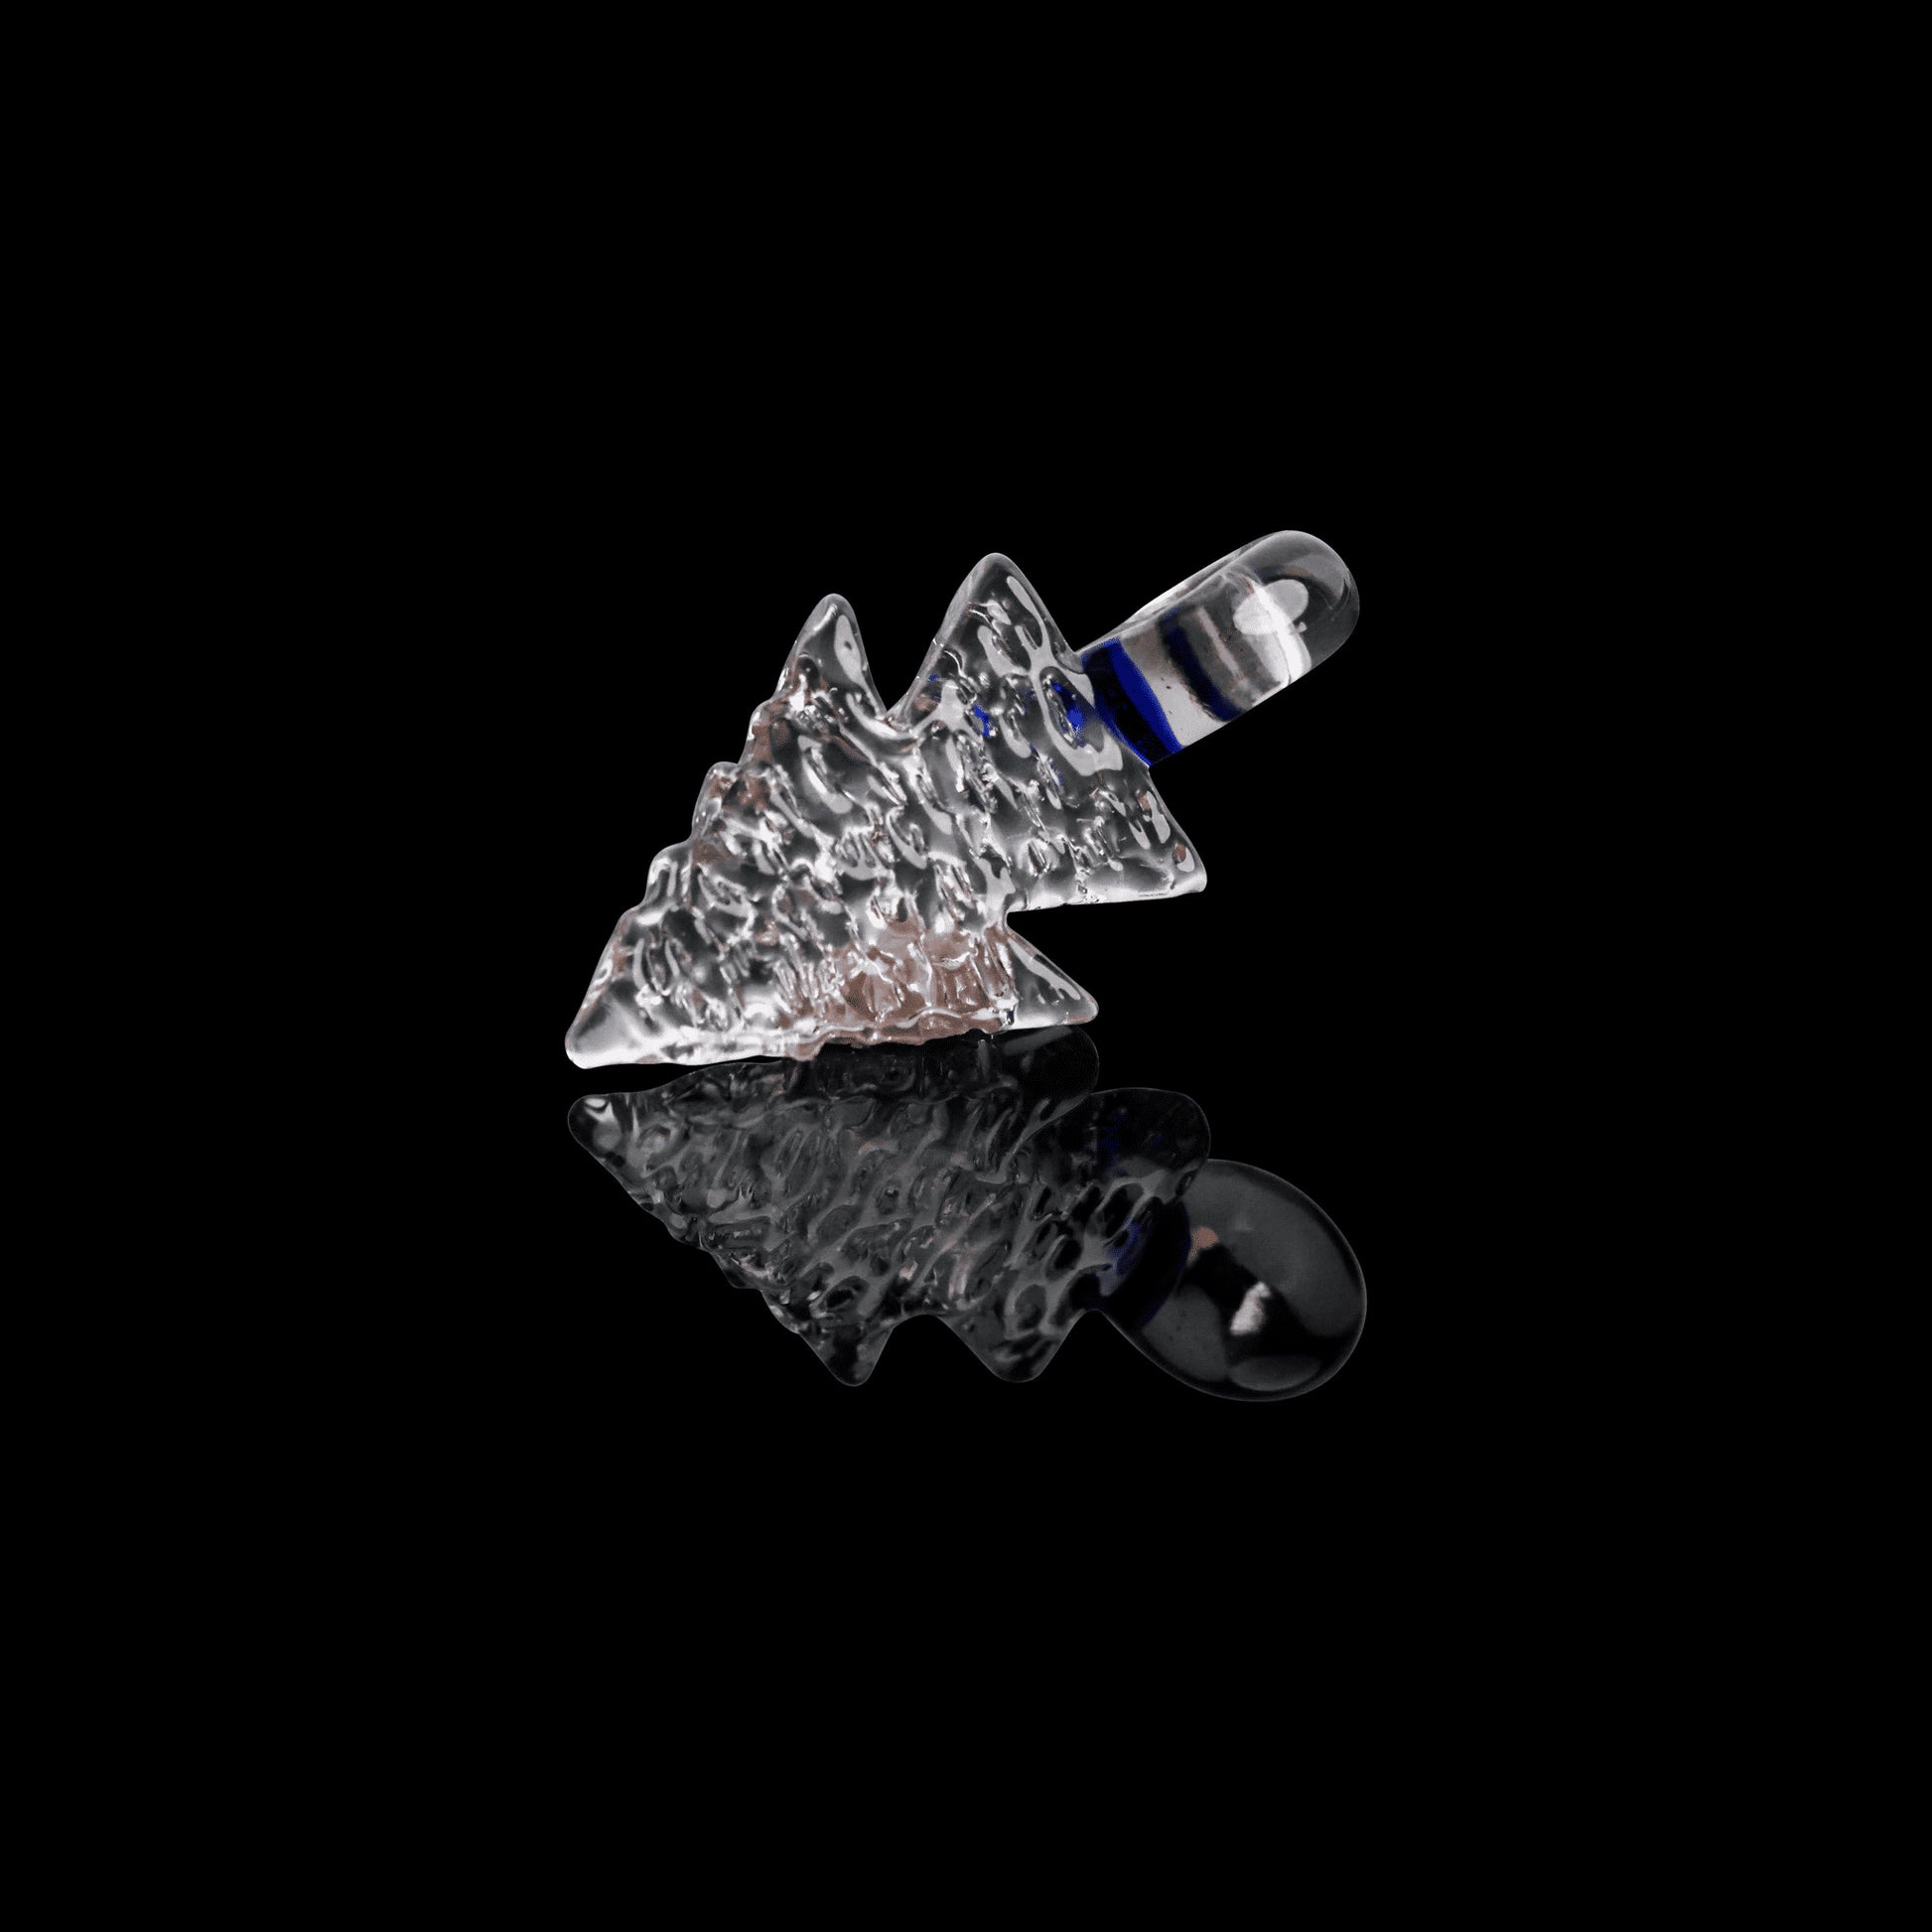 exquisite glass pendant - GA Voodoo CFL Arrowhead Pendant by ElksThatRun (2022 Drop)